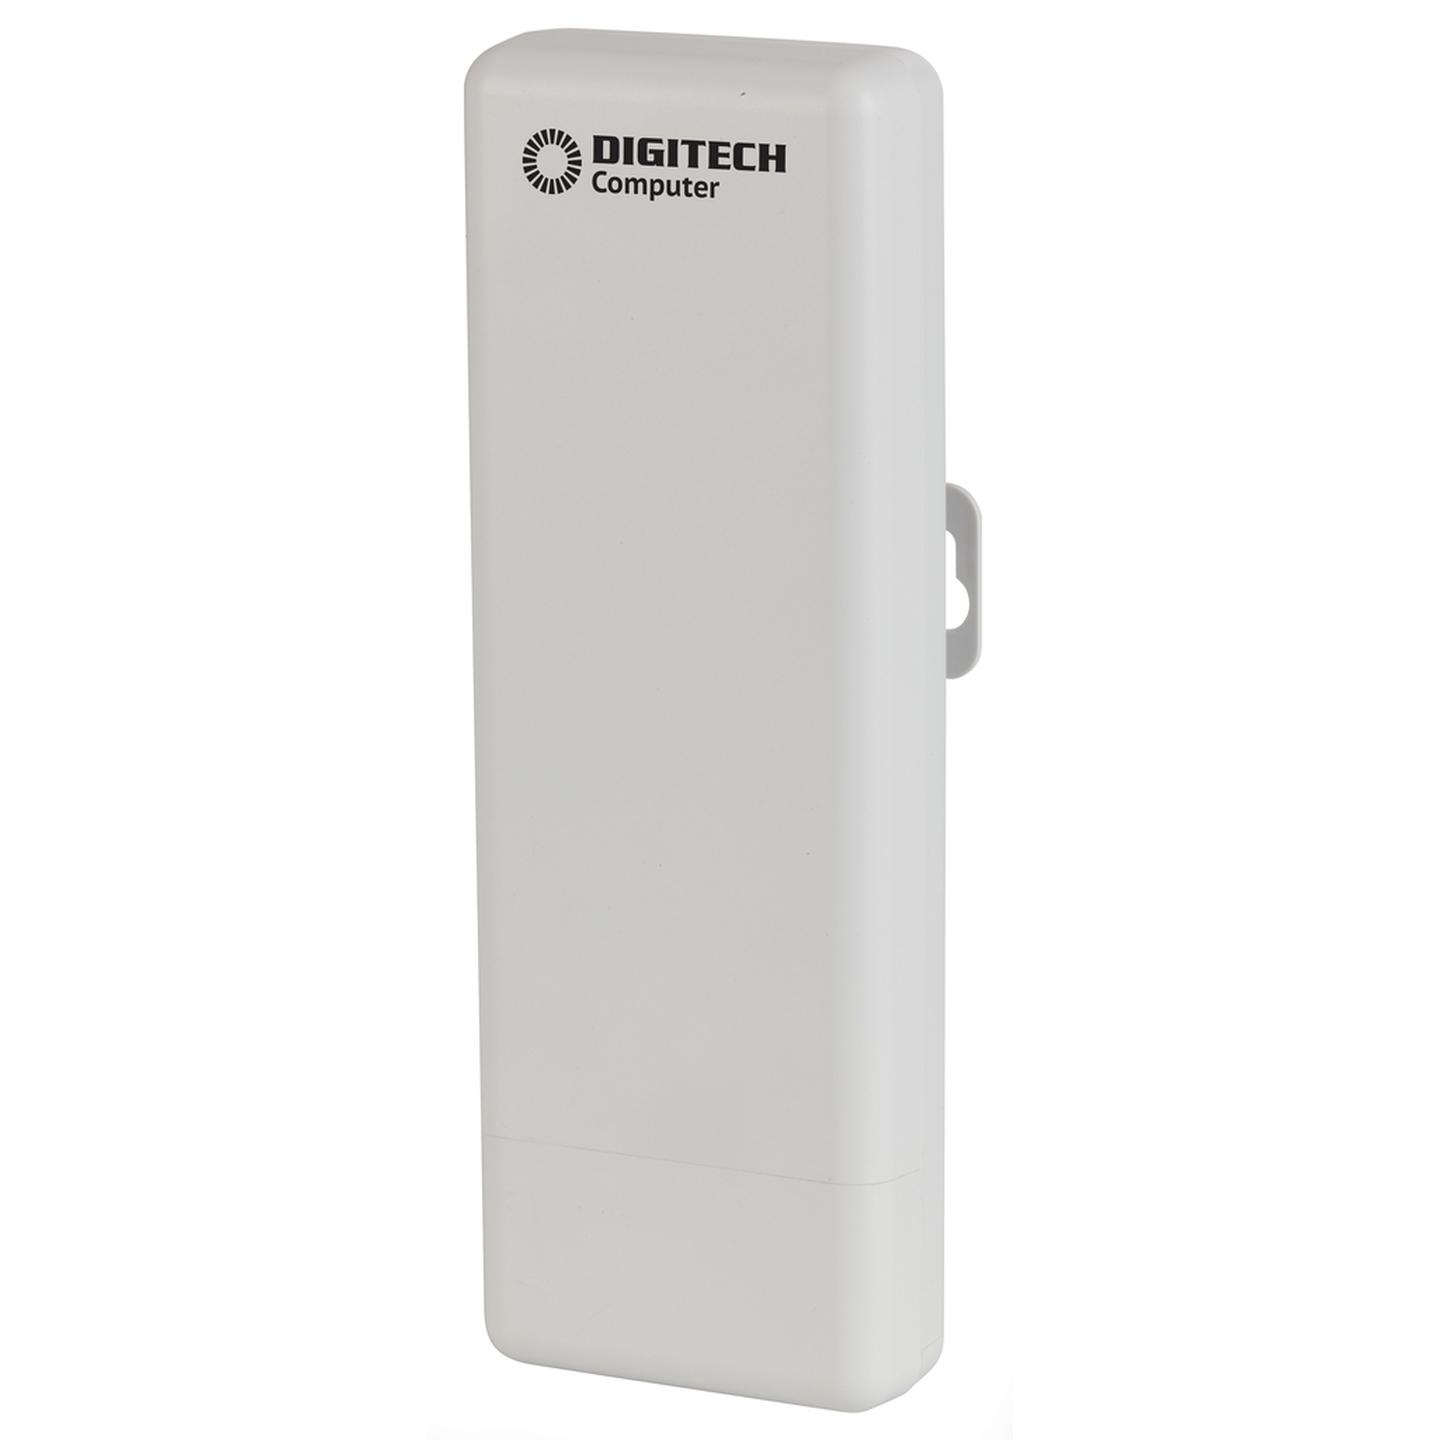 High Power Wireless Outdoor Router/Range Extender 802.11n